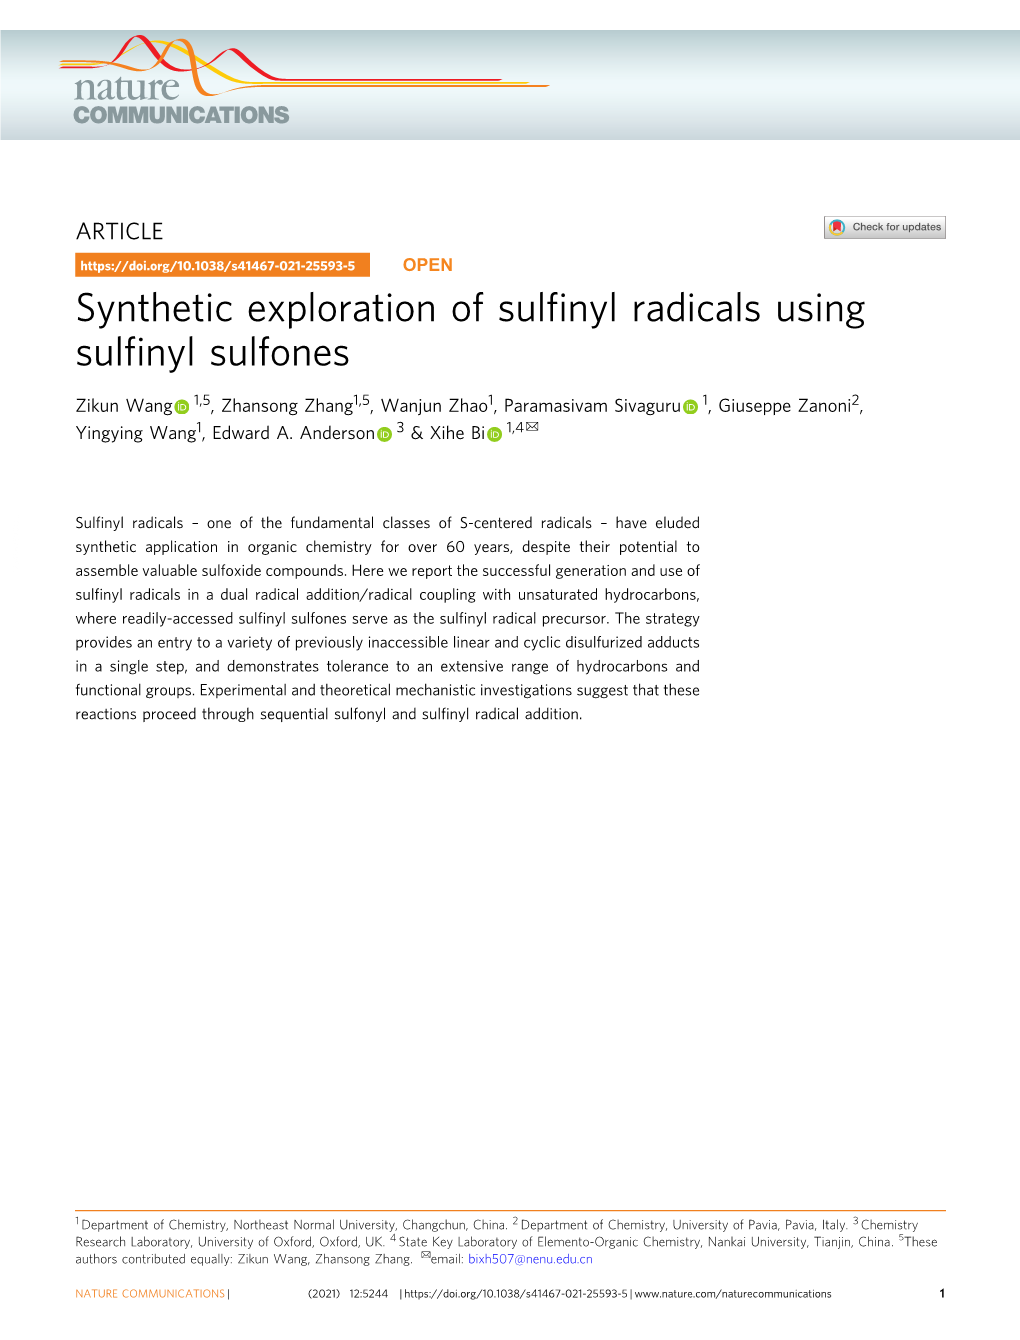 Synthetic Exploration of Sulfinyl Radicals Using Sulfinyl Sulfones